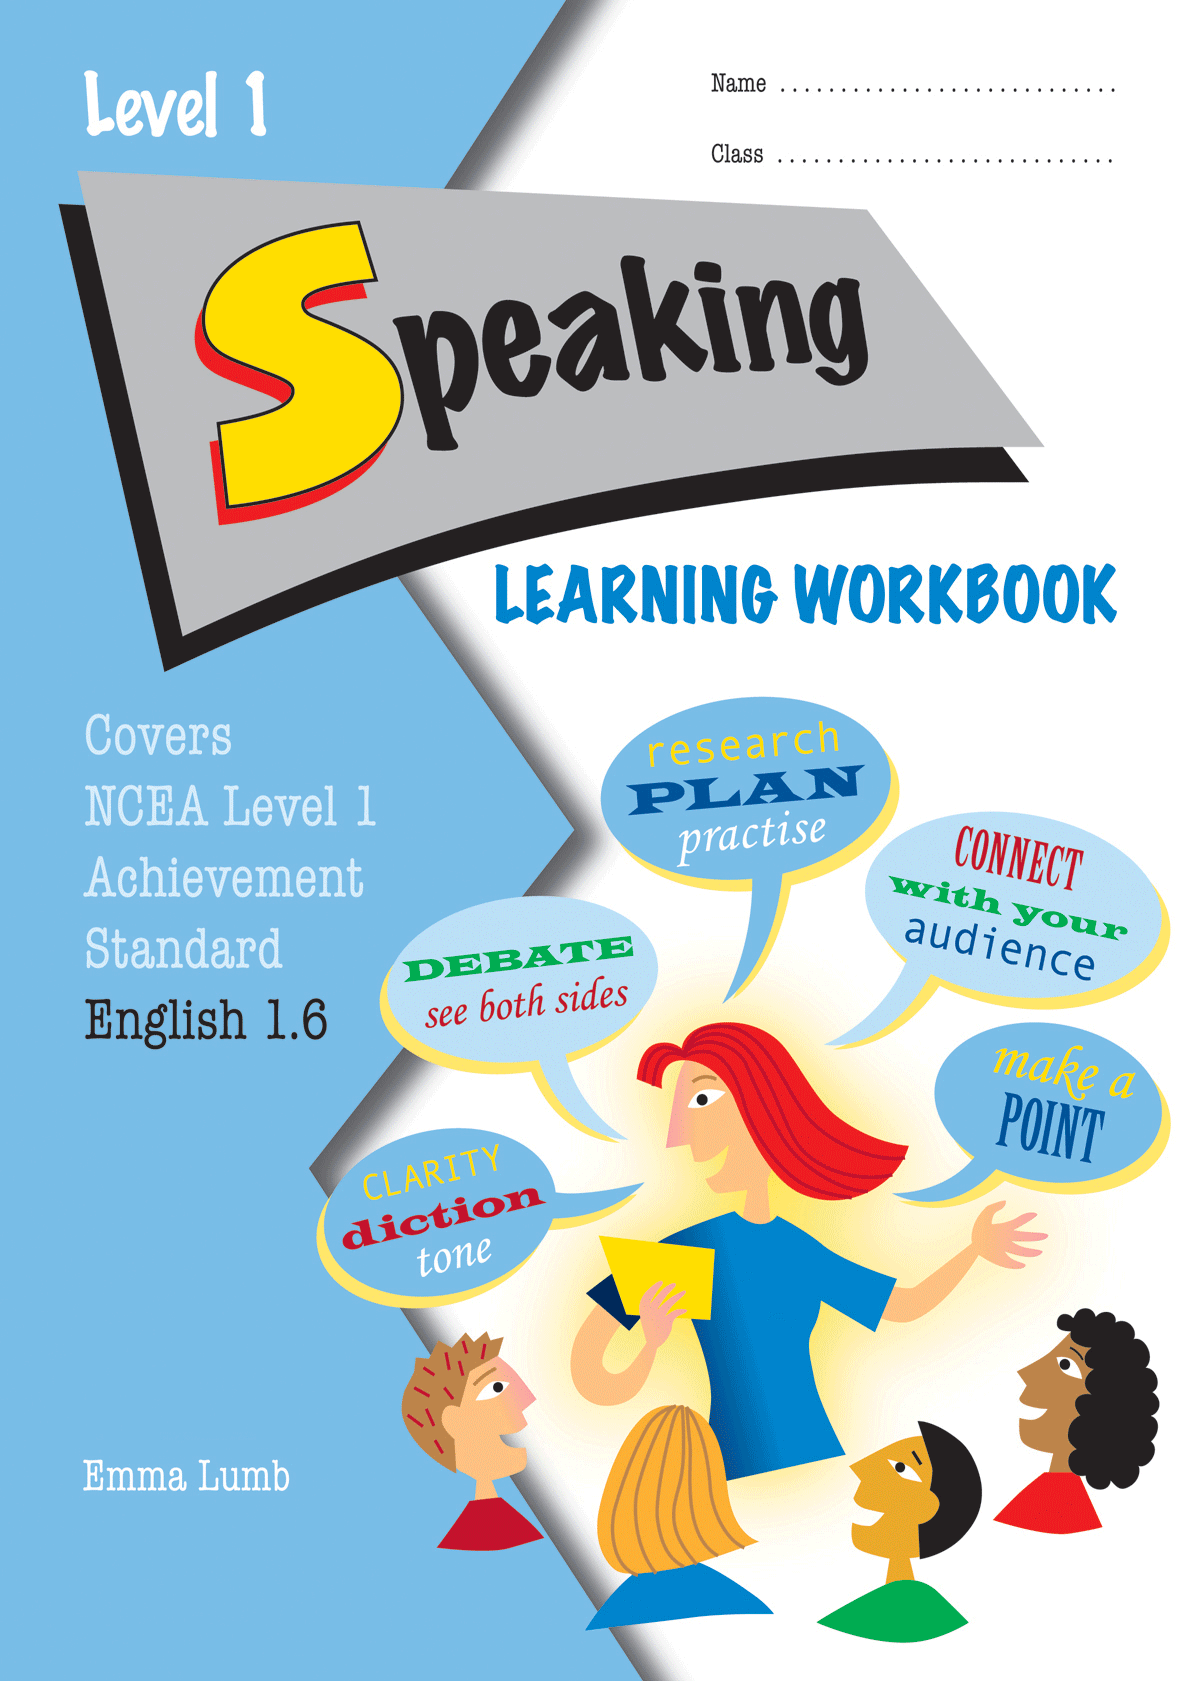 Level 1 Speaking 1.6 Learning Workbook